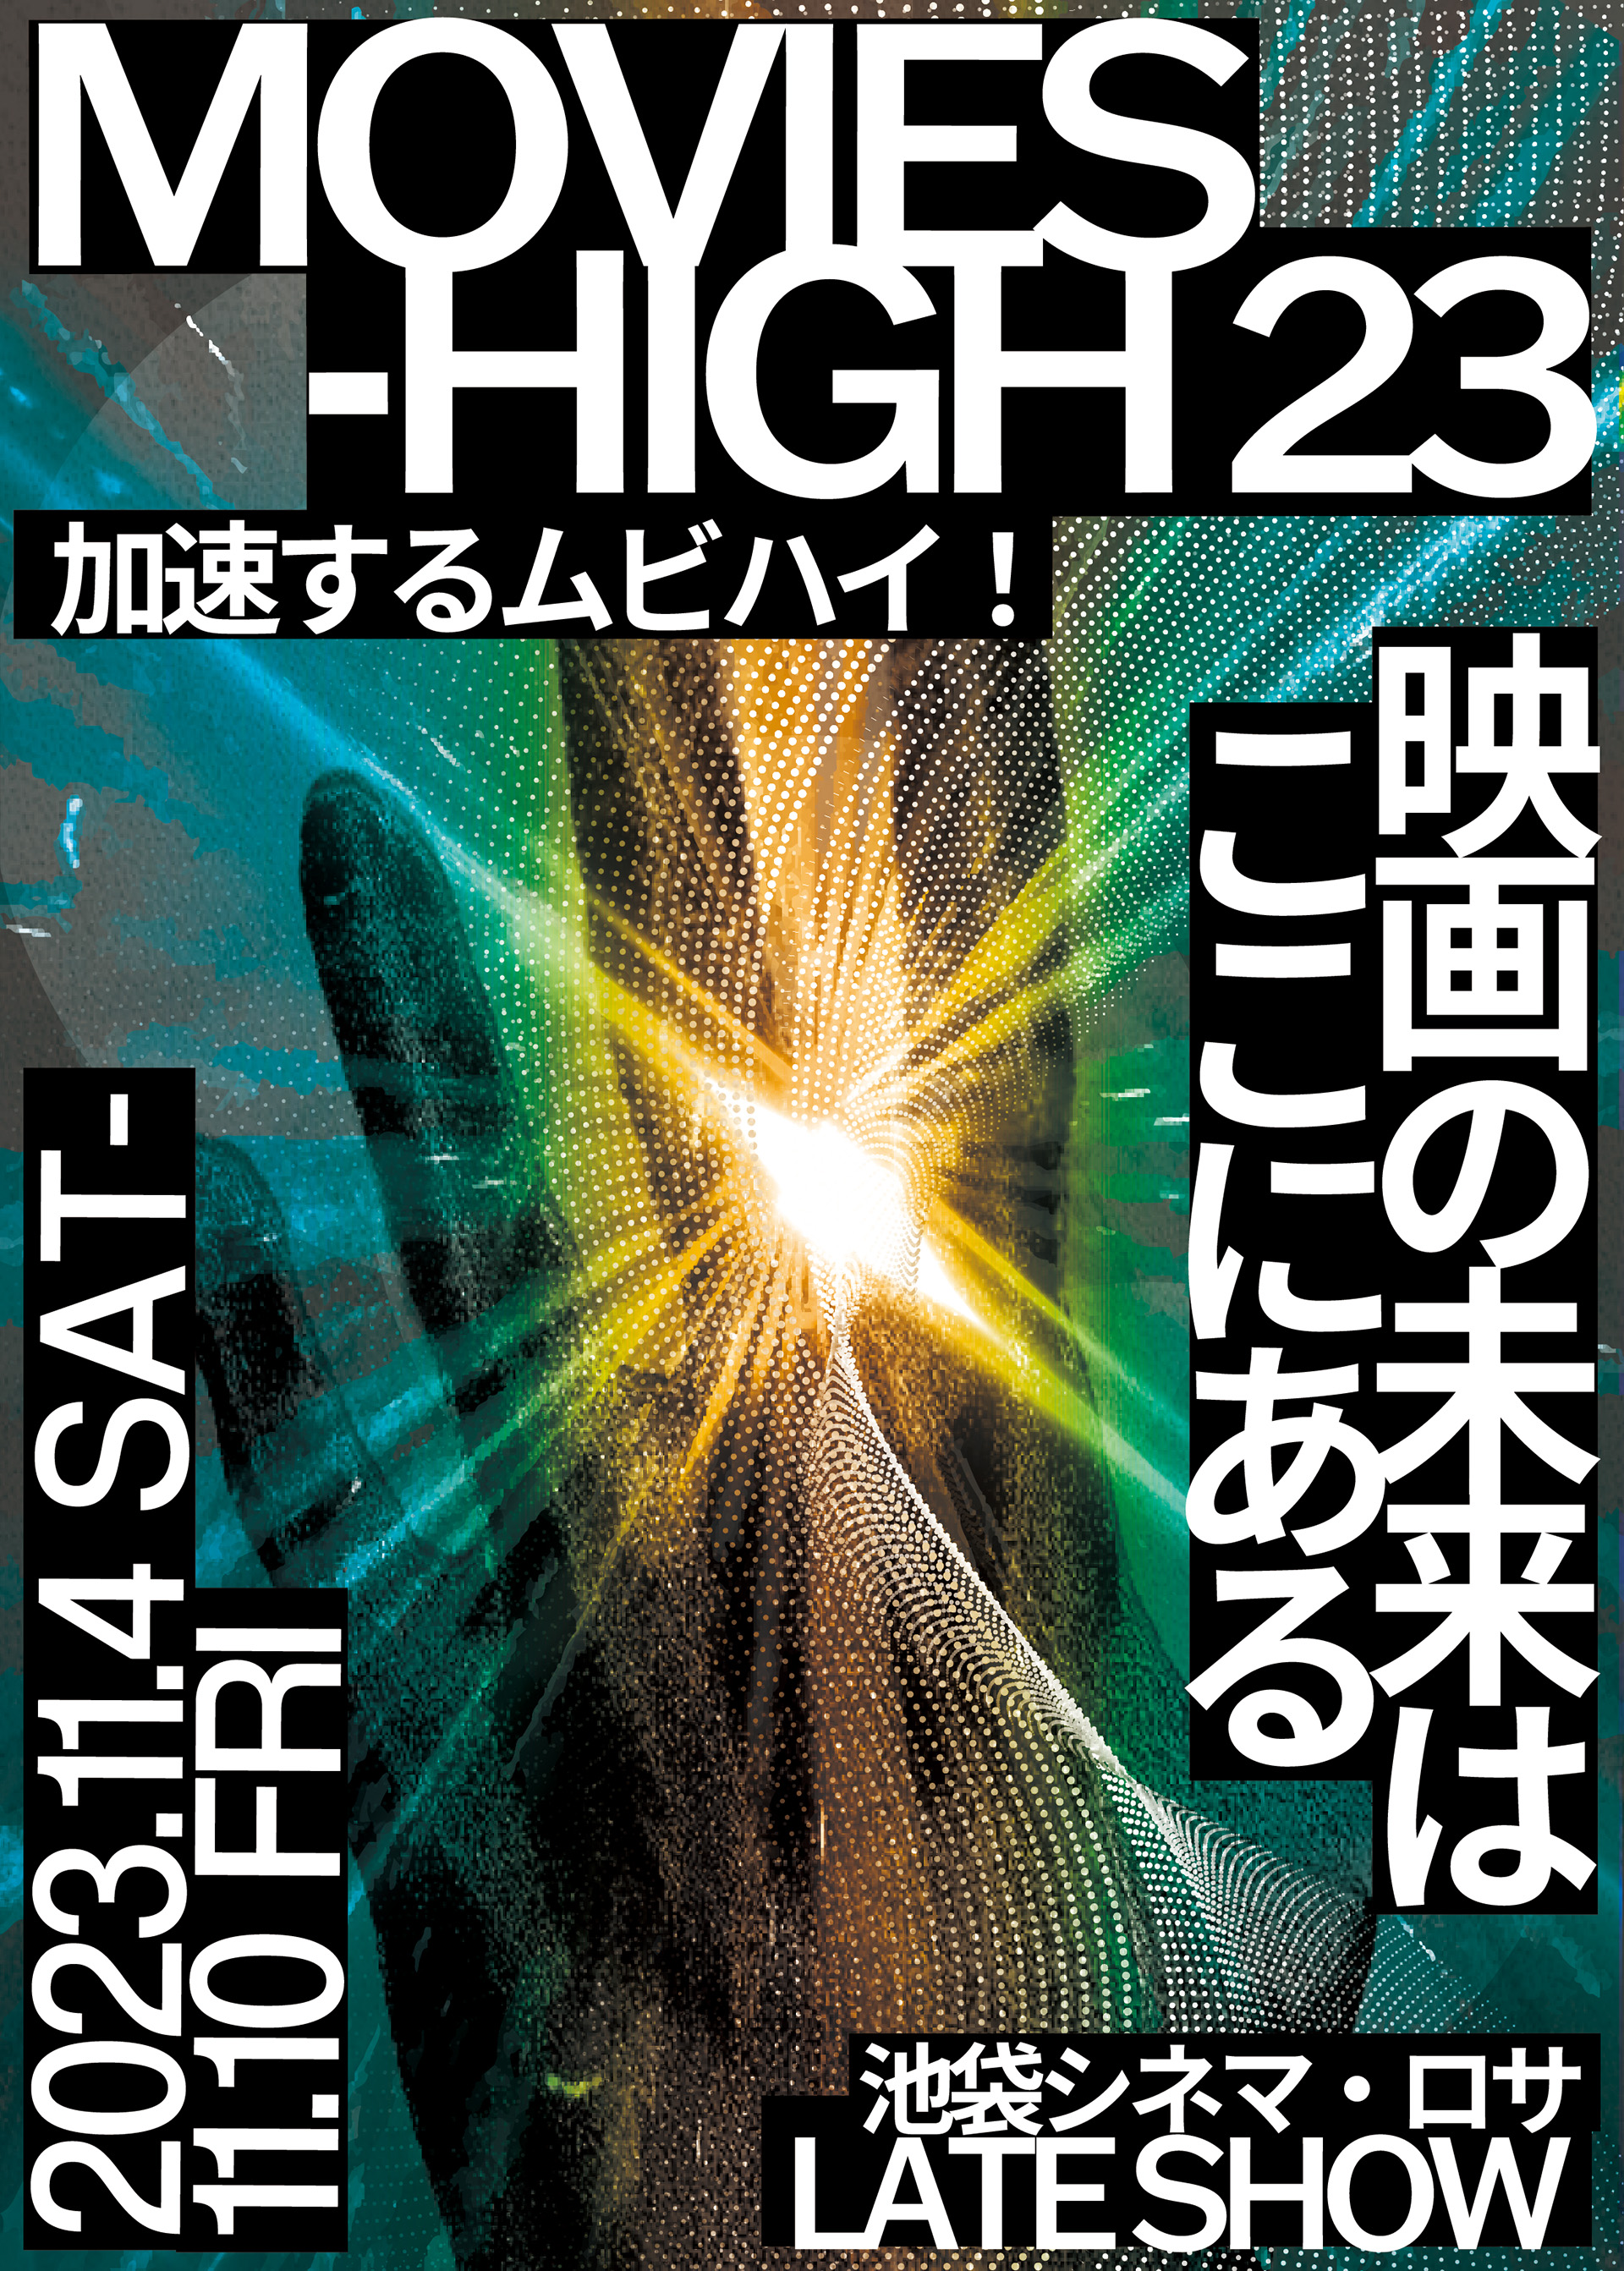 MOVIES-HIGH 23